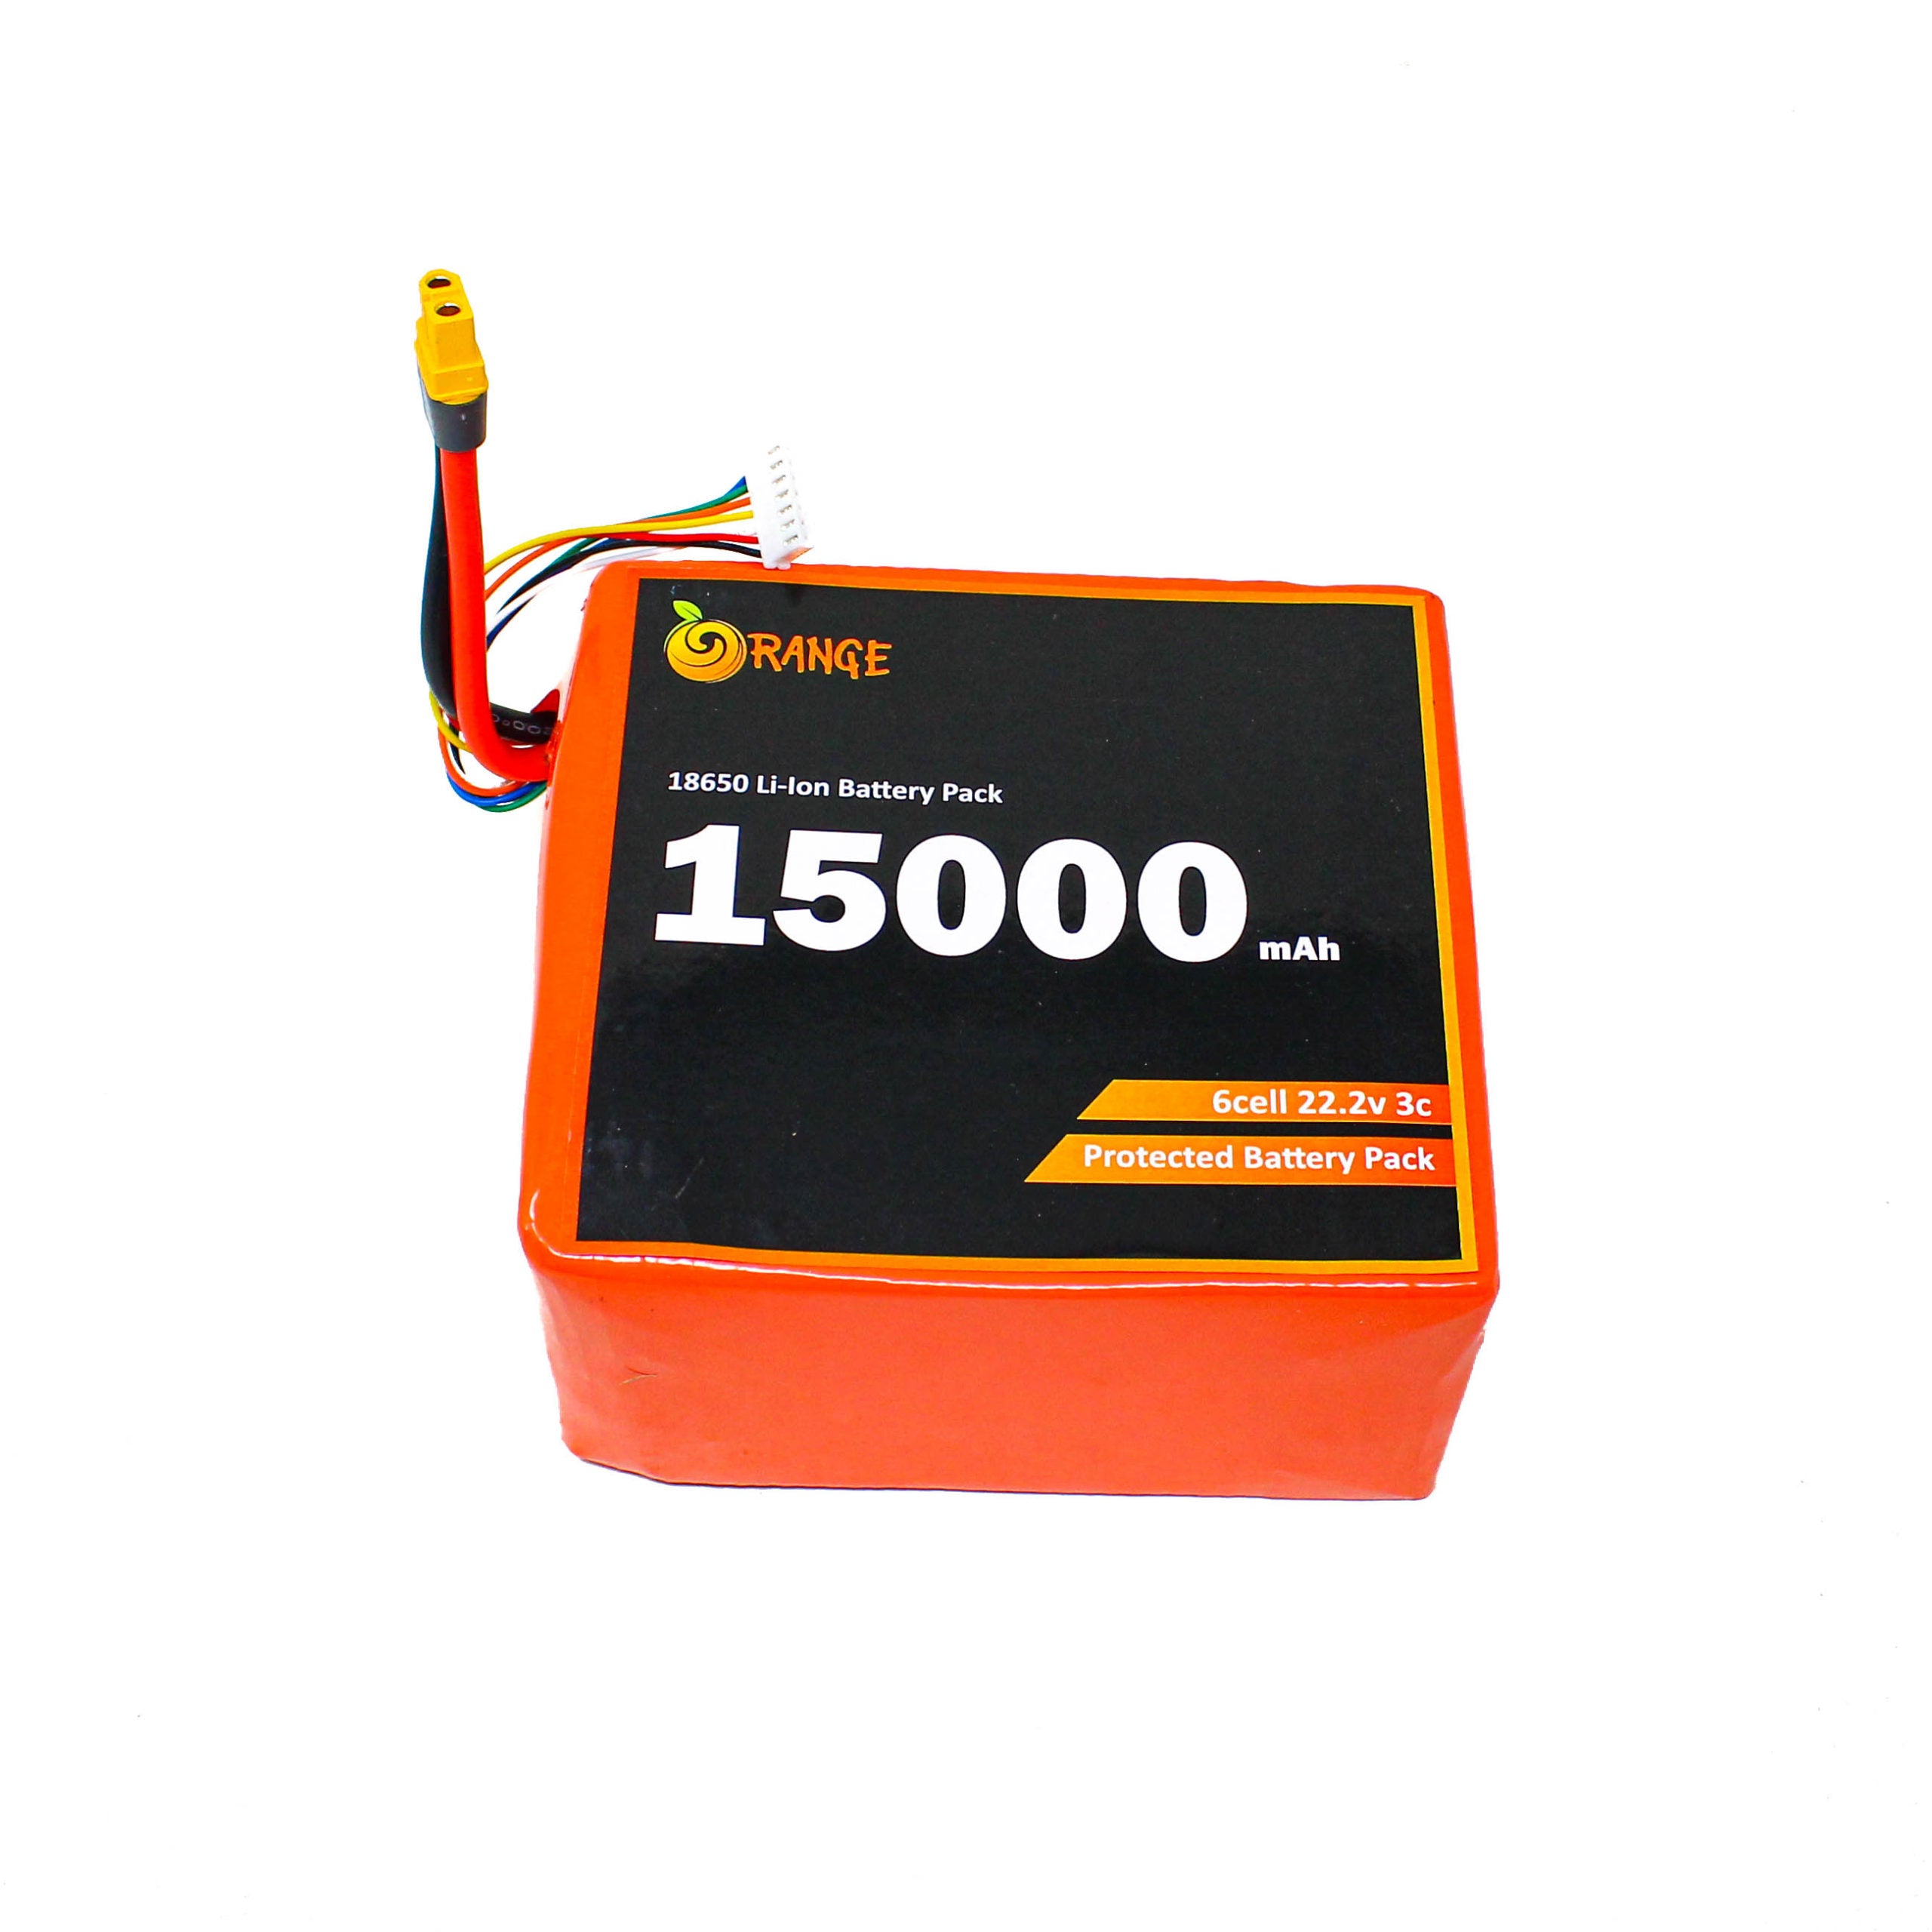 Orange ICR 18650 Li-ion 15000 Mah 6s 22.2v 6s6p Protected Battery Pack-3c